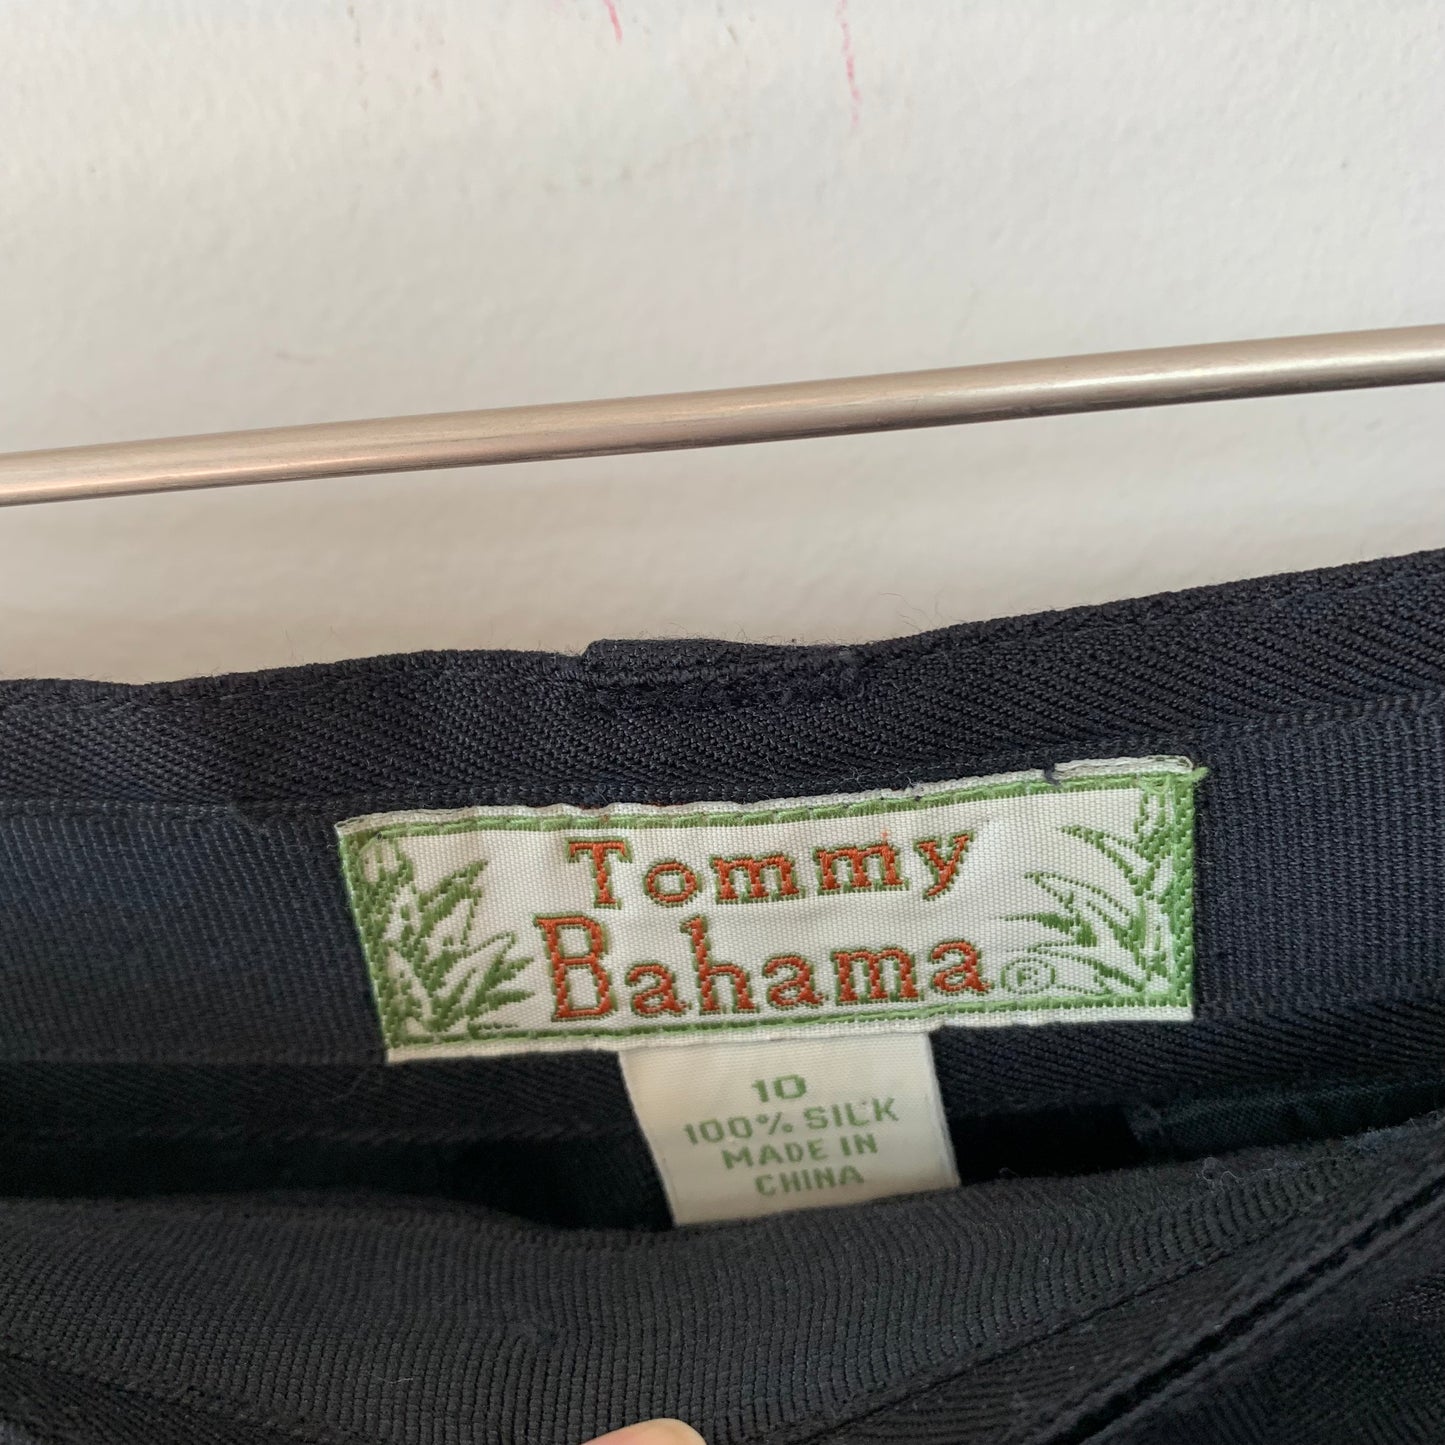 Tommy Bahama Black Silk Trouser Shorts Long Length 10